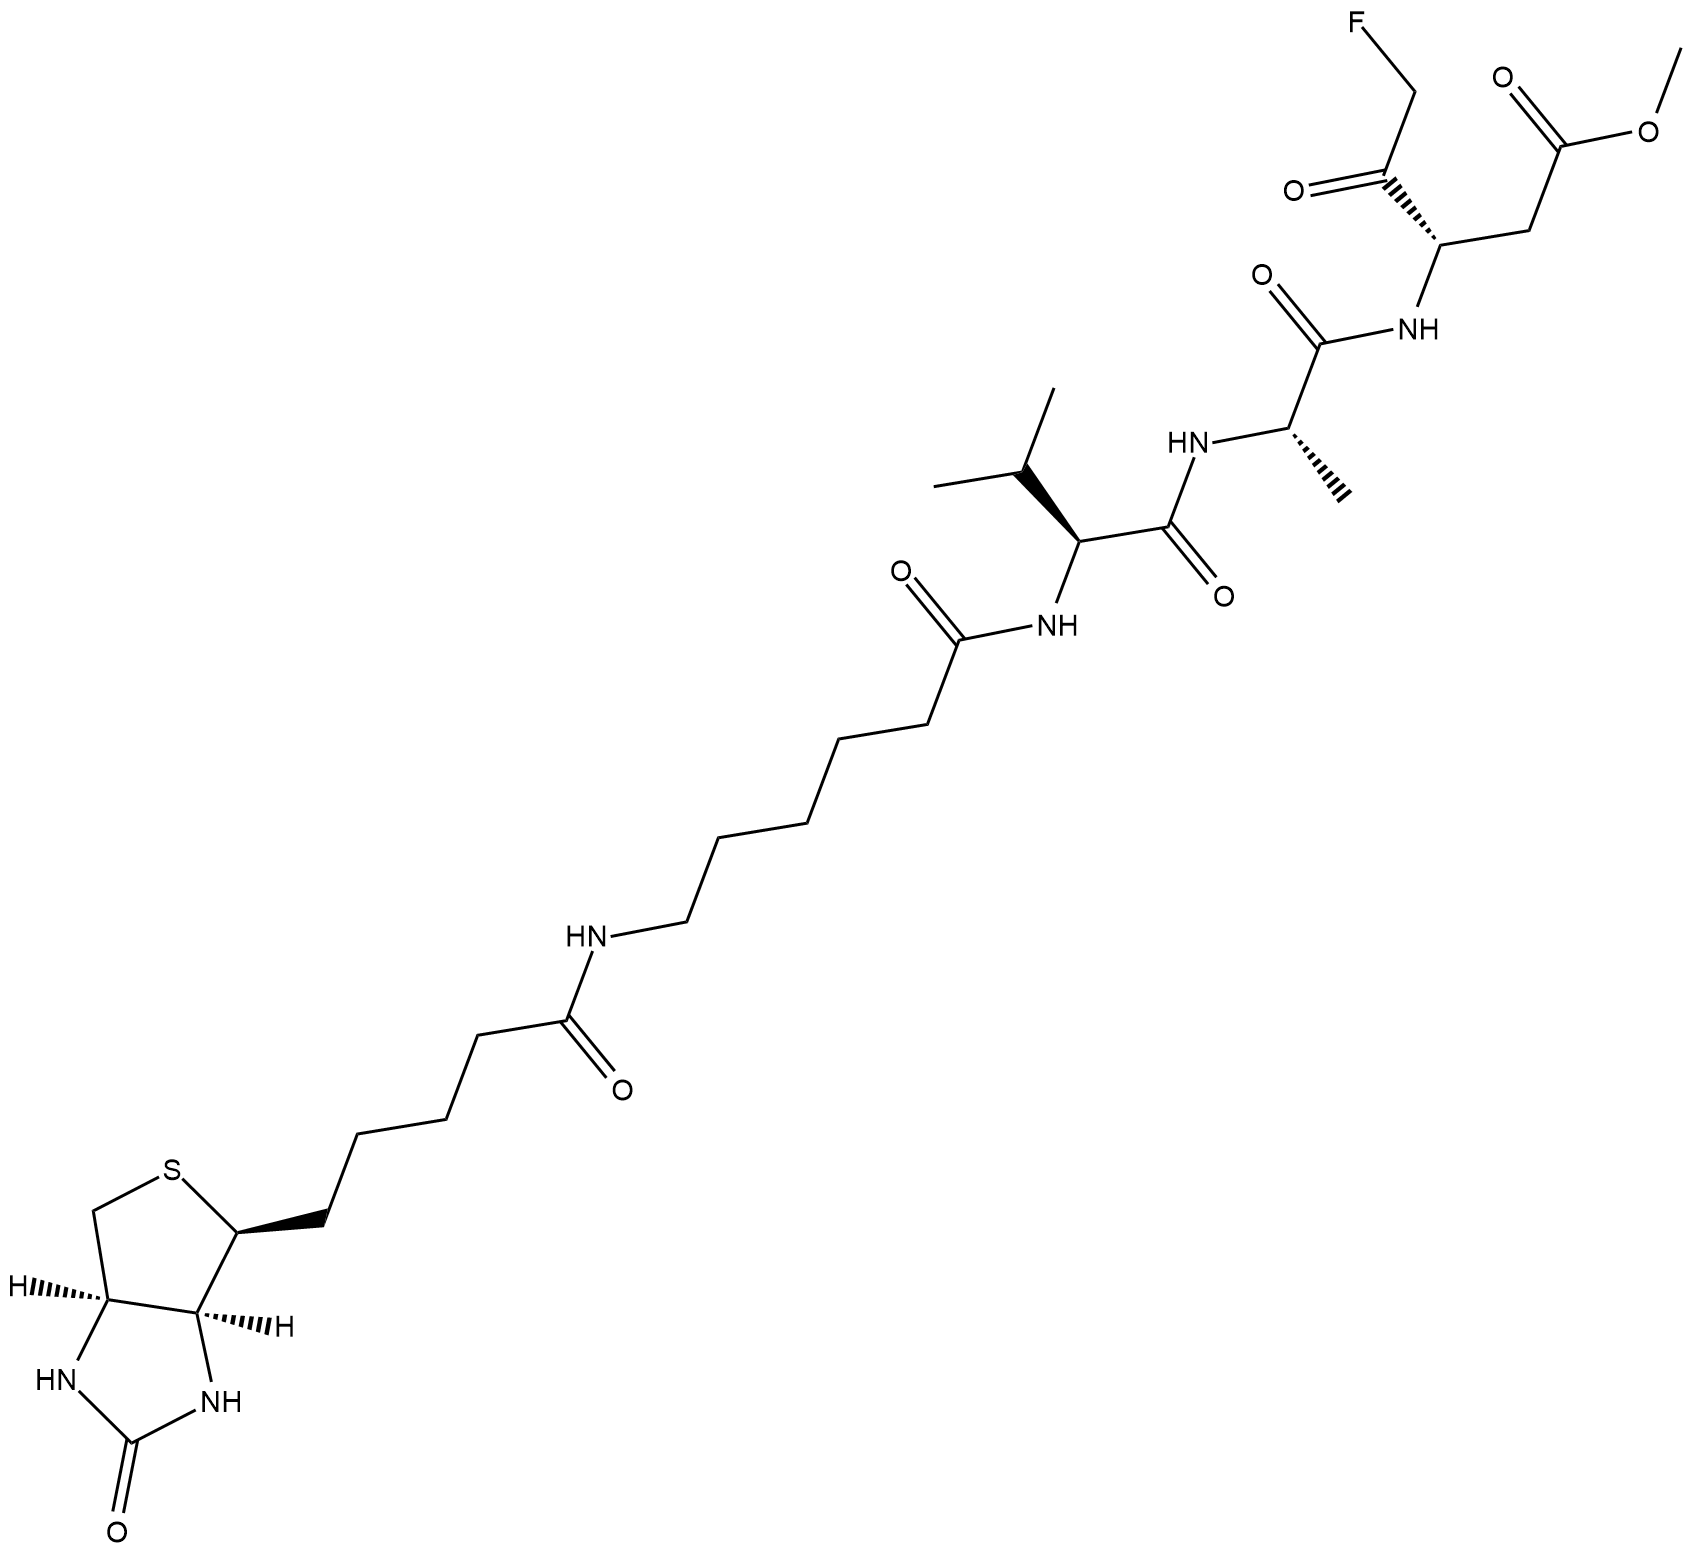 Biotin-VAD-FMK  Chemical Structure